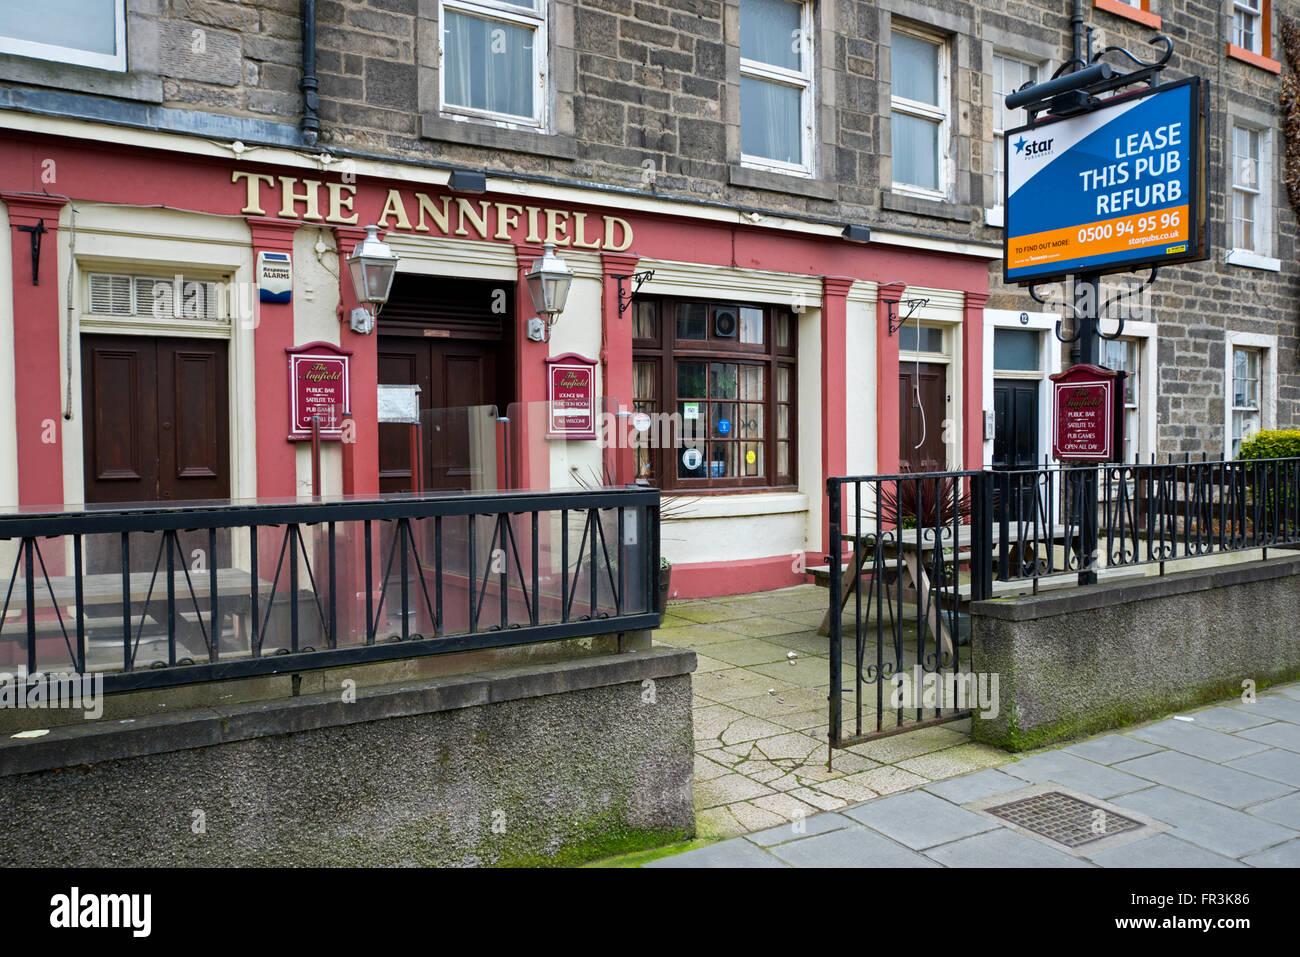 'Pub' arrendar este signo fuera un Public House en Edimburgo. Foto de stock